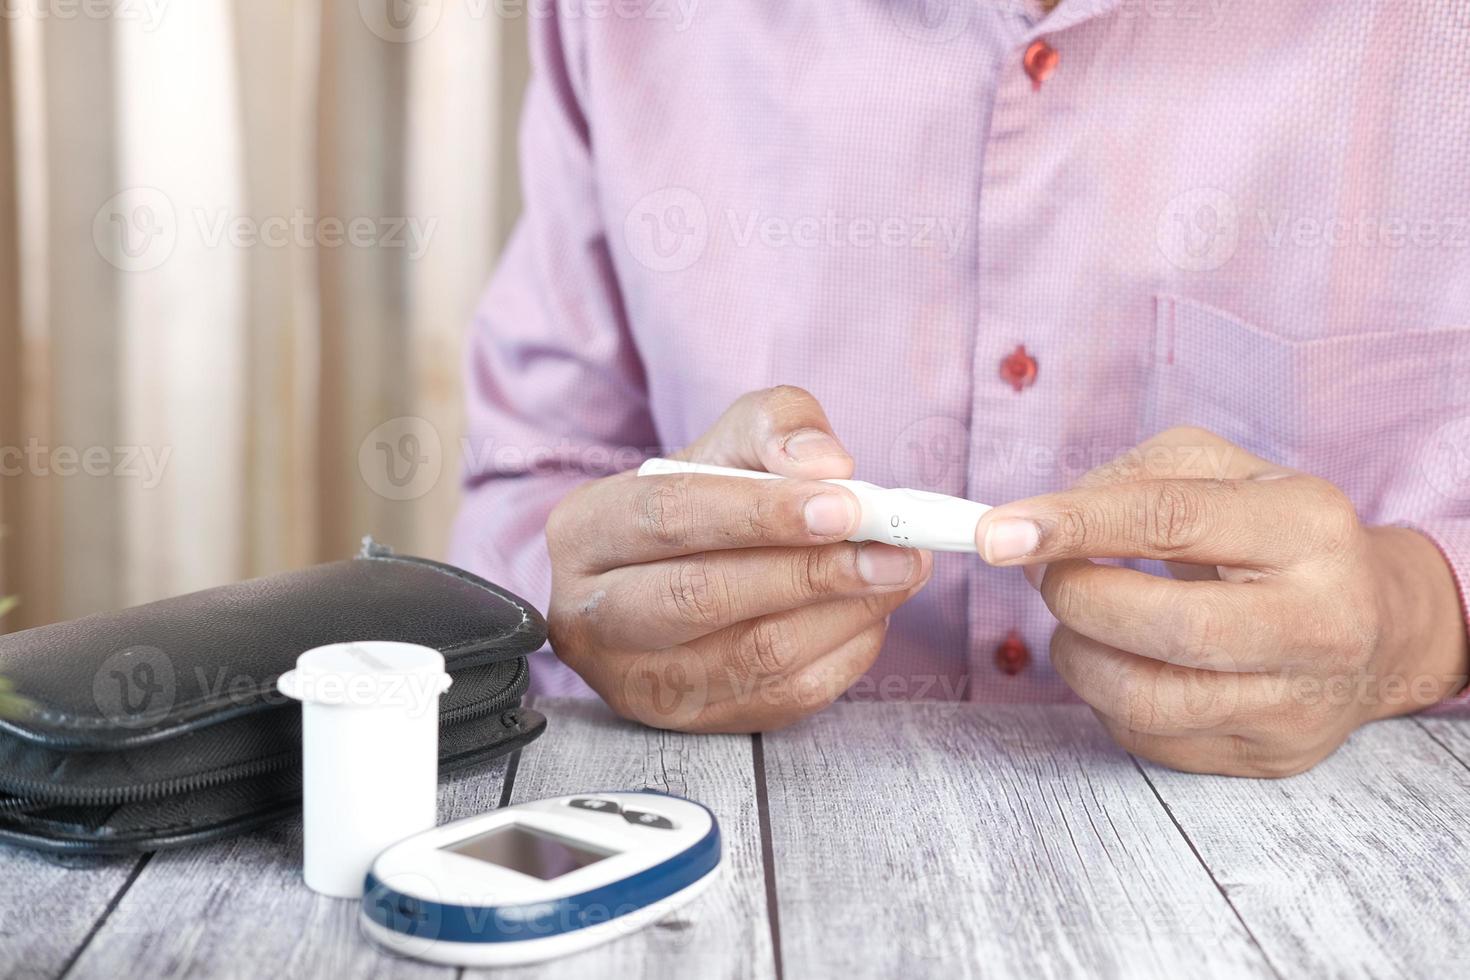 Man's hand measuring blood sugar level photo